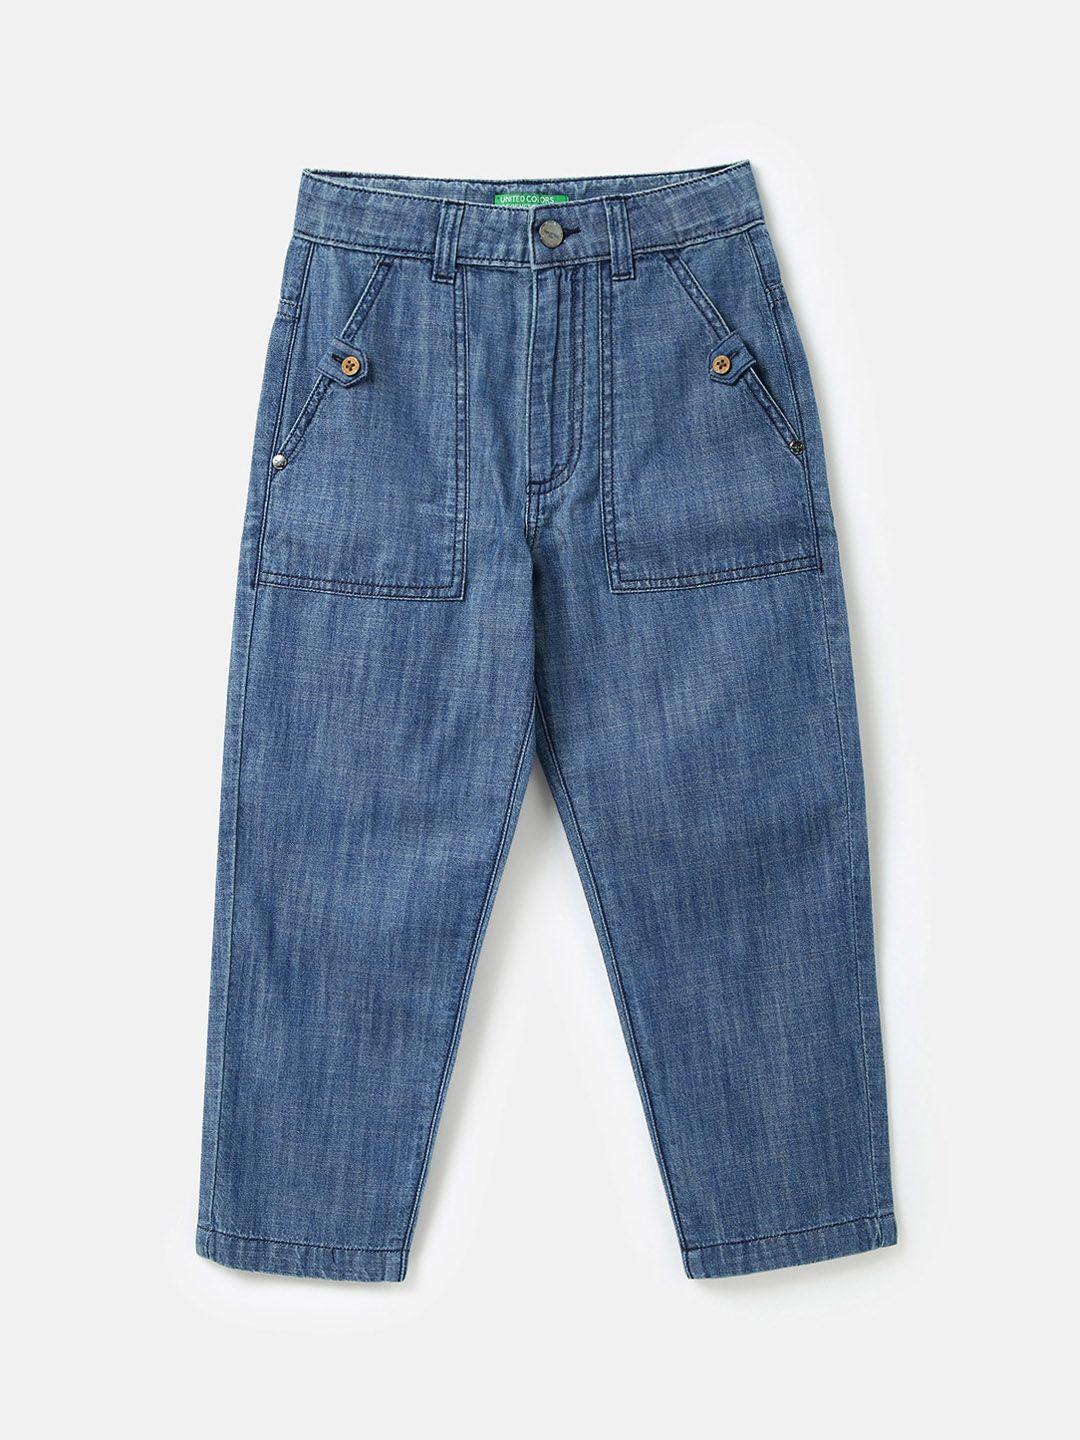 united-colors-of-benetton-boys-cotton--jeans